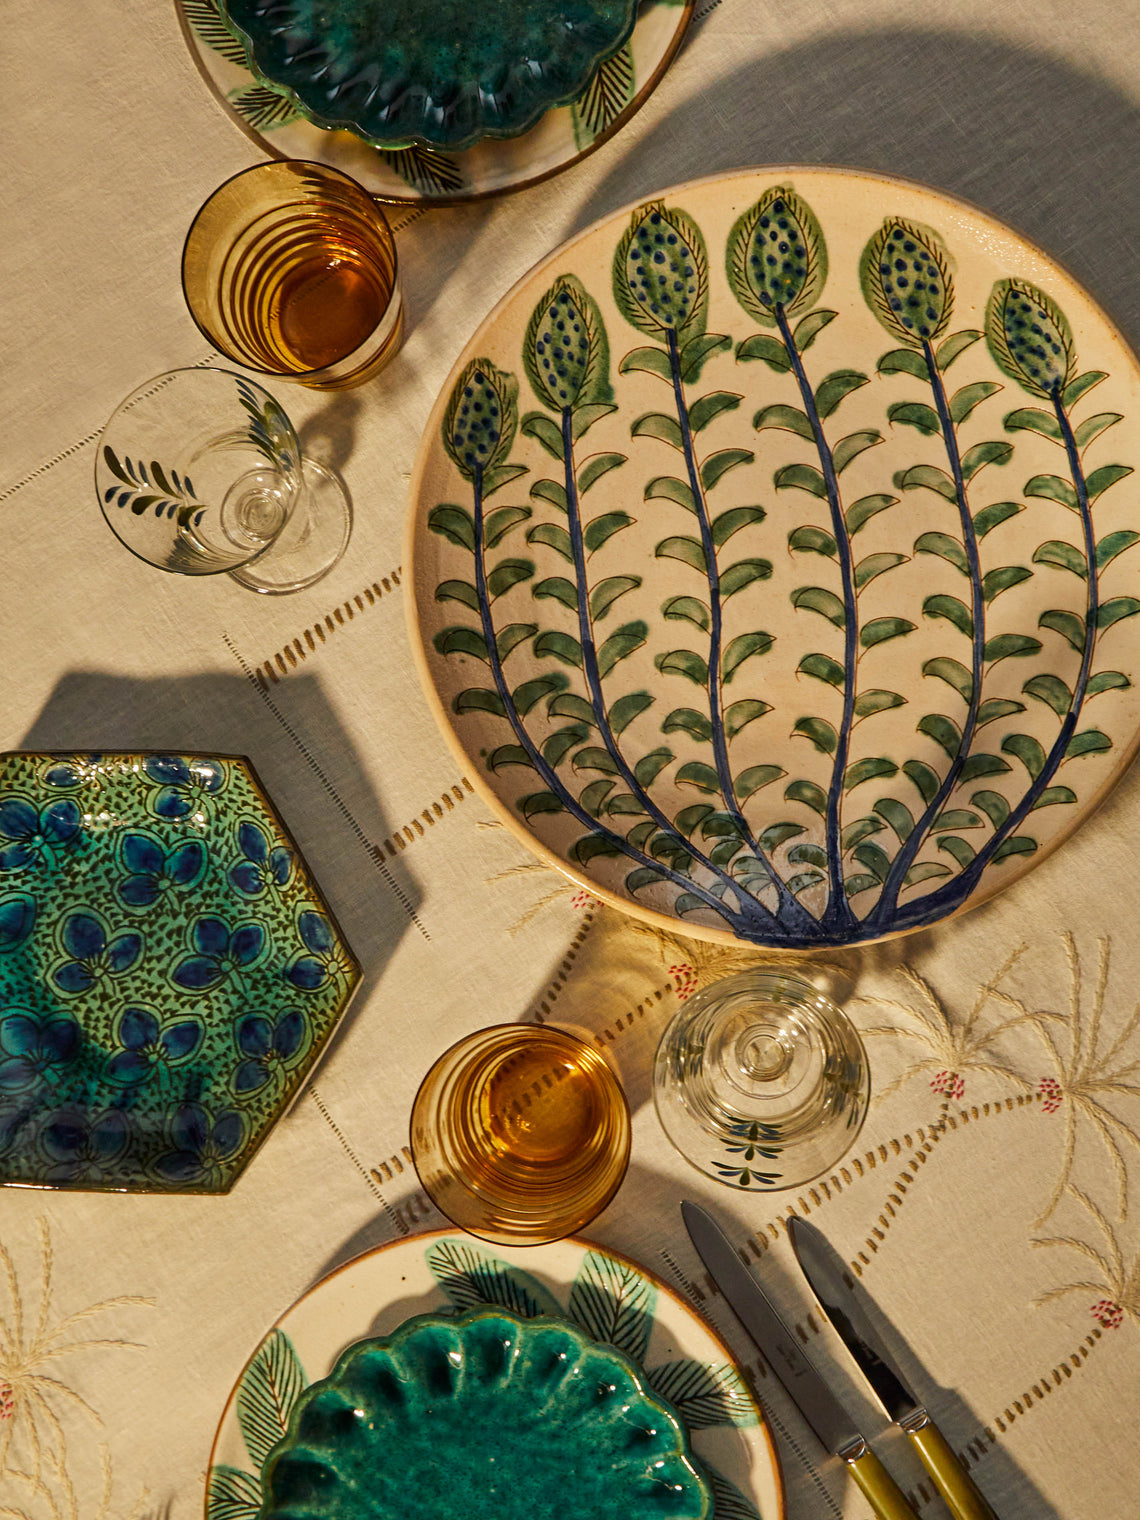 Malaika - Buds Hand-Painted Ceramic Serving Platter - Green - ABASK